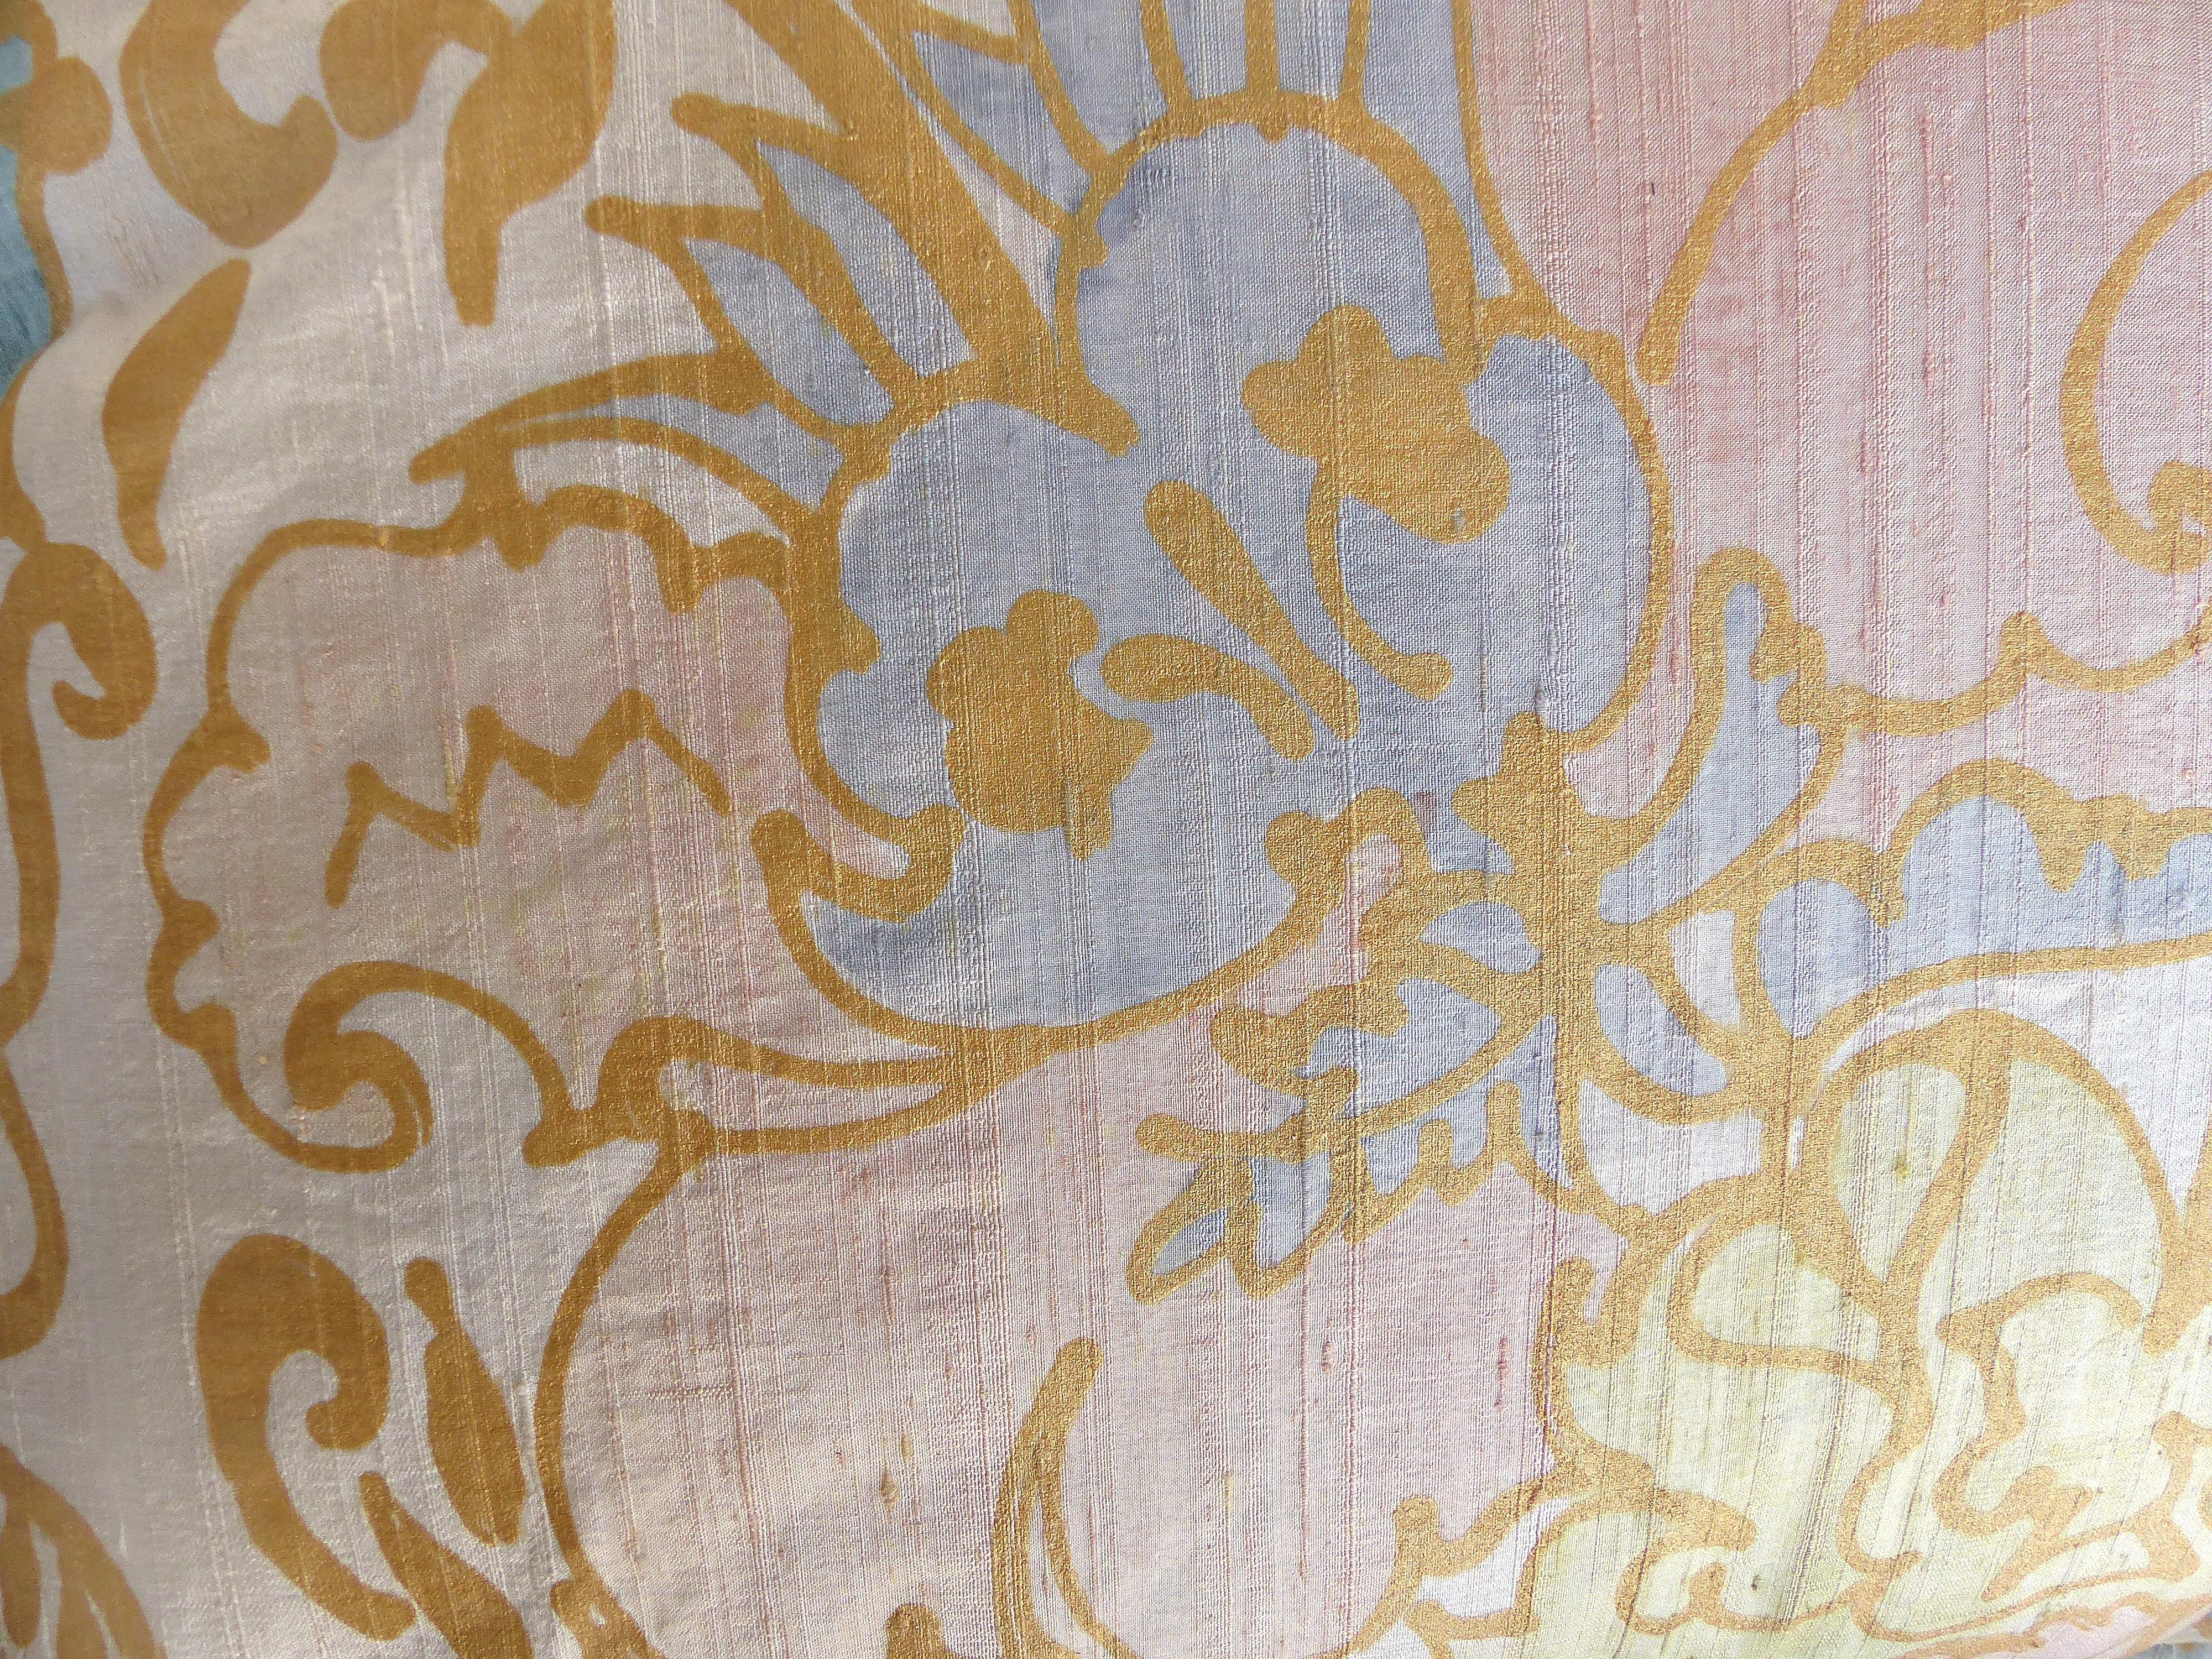 Barbara Beckmann Hand-Printed Silk Pillows, Pairs Available 2